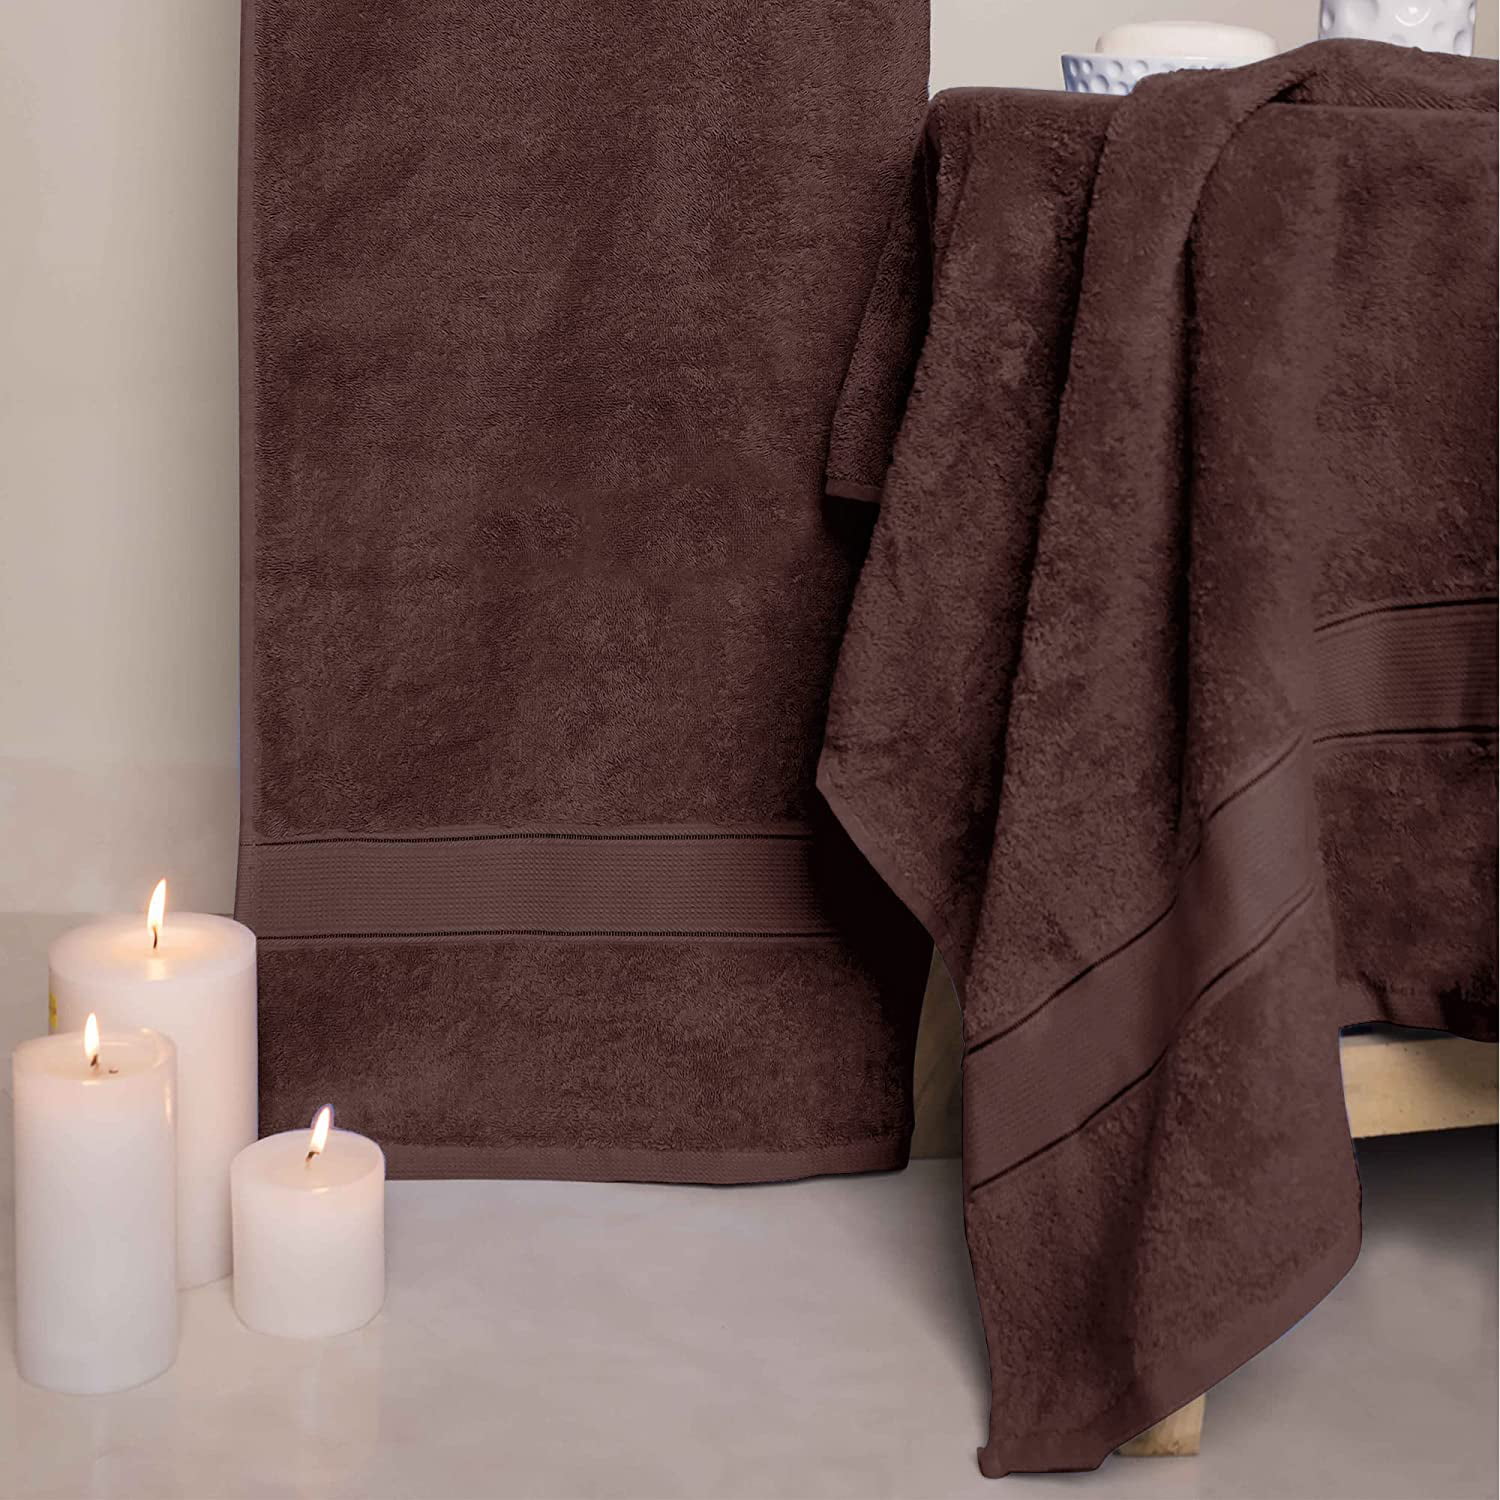 Tens Towels Green 4 Piece XL Extra Large Bath Towels Set 30 x 60 Inches Premium Cotton Bathroom Towels Plush Quality